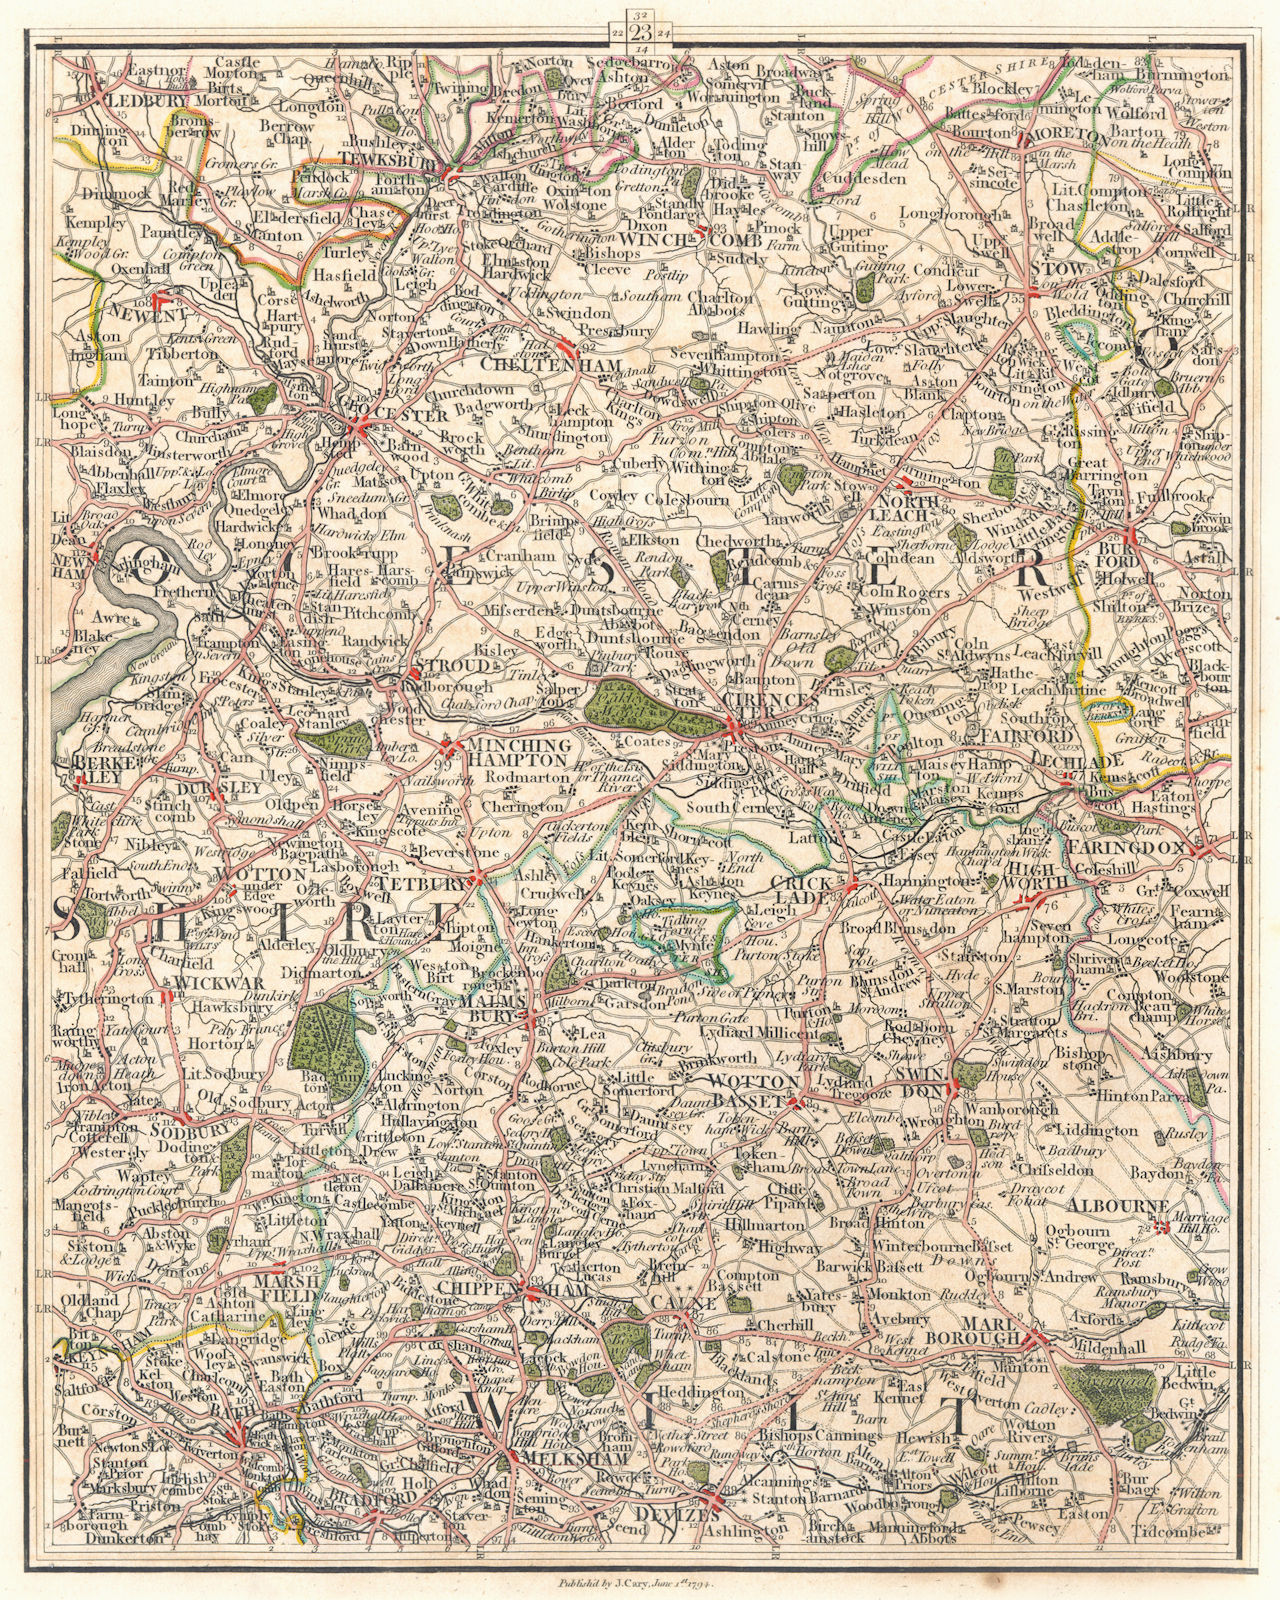 COTSWOLDS. Gloucester Cirencester Swindon Cheltenham Bath Stroud. CARY 1794 map